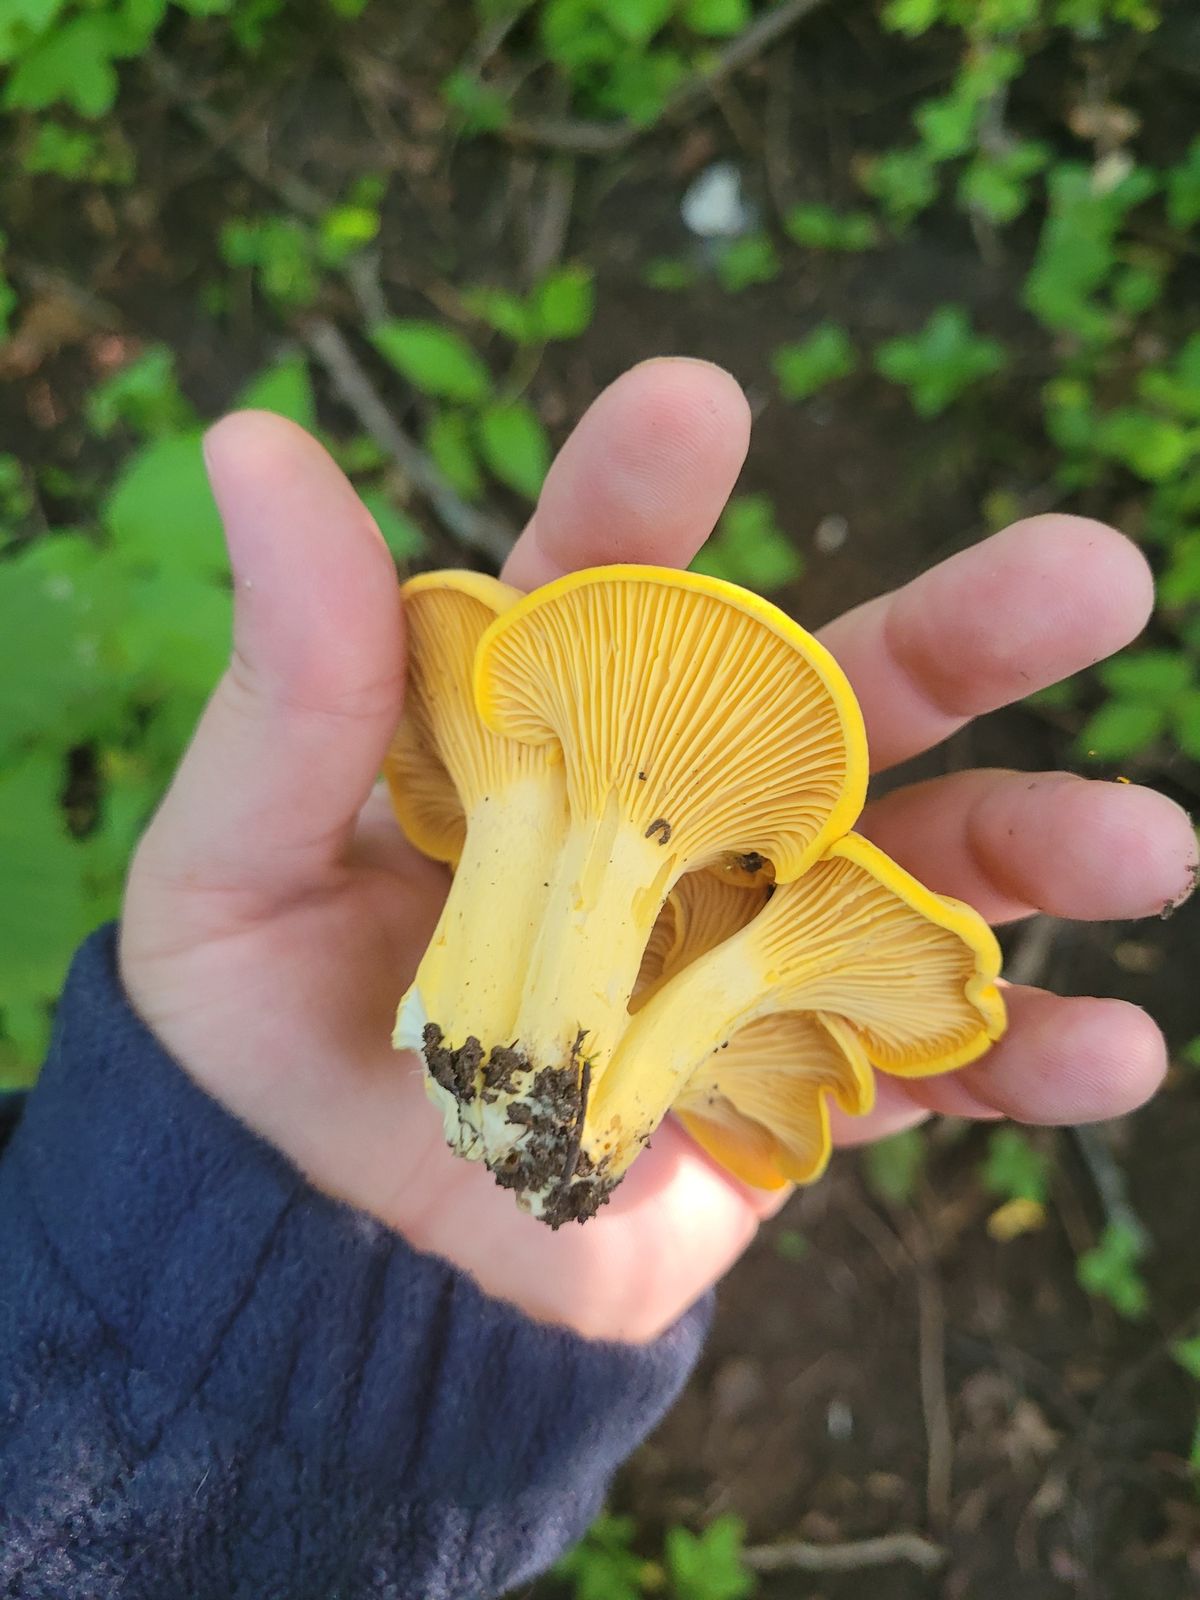 Wild Mushrooms 101